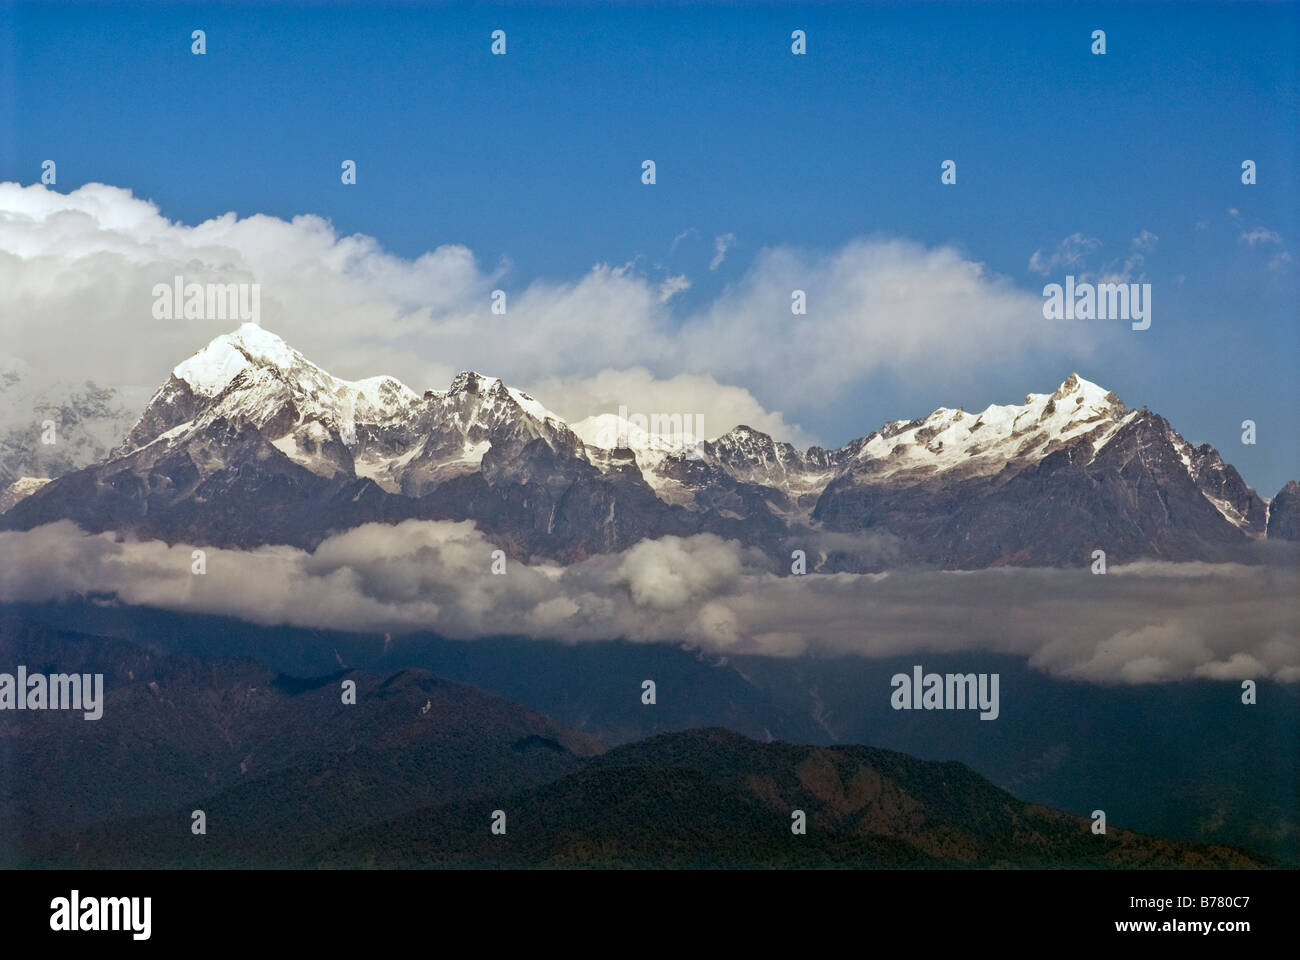 Peaks of the Kangchenjunga mountain range, Sikkim, seen from Darjeeling, India Stock Photo